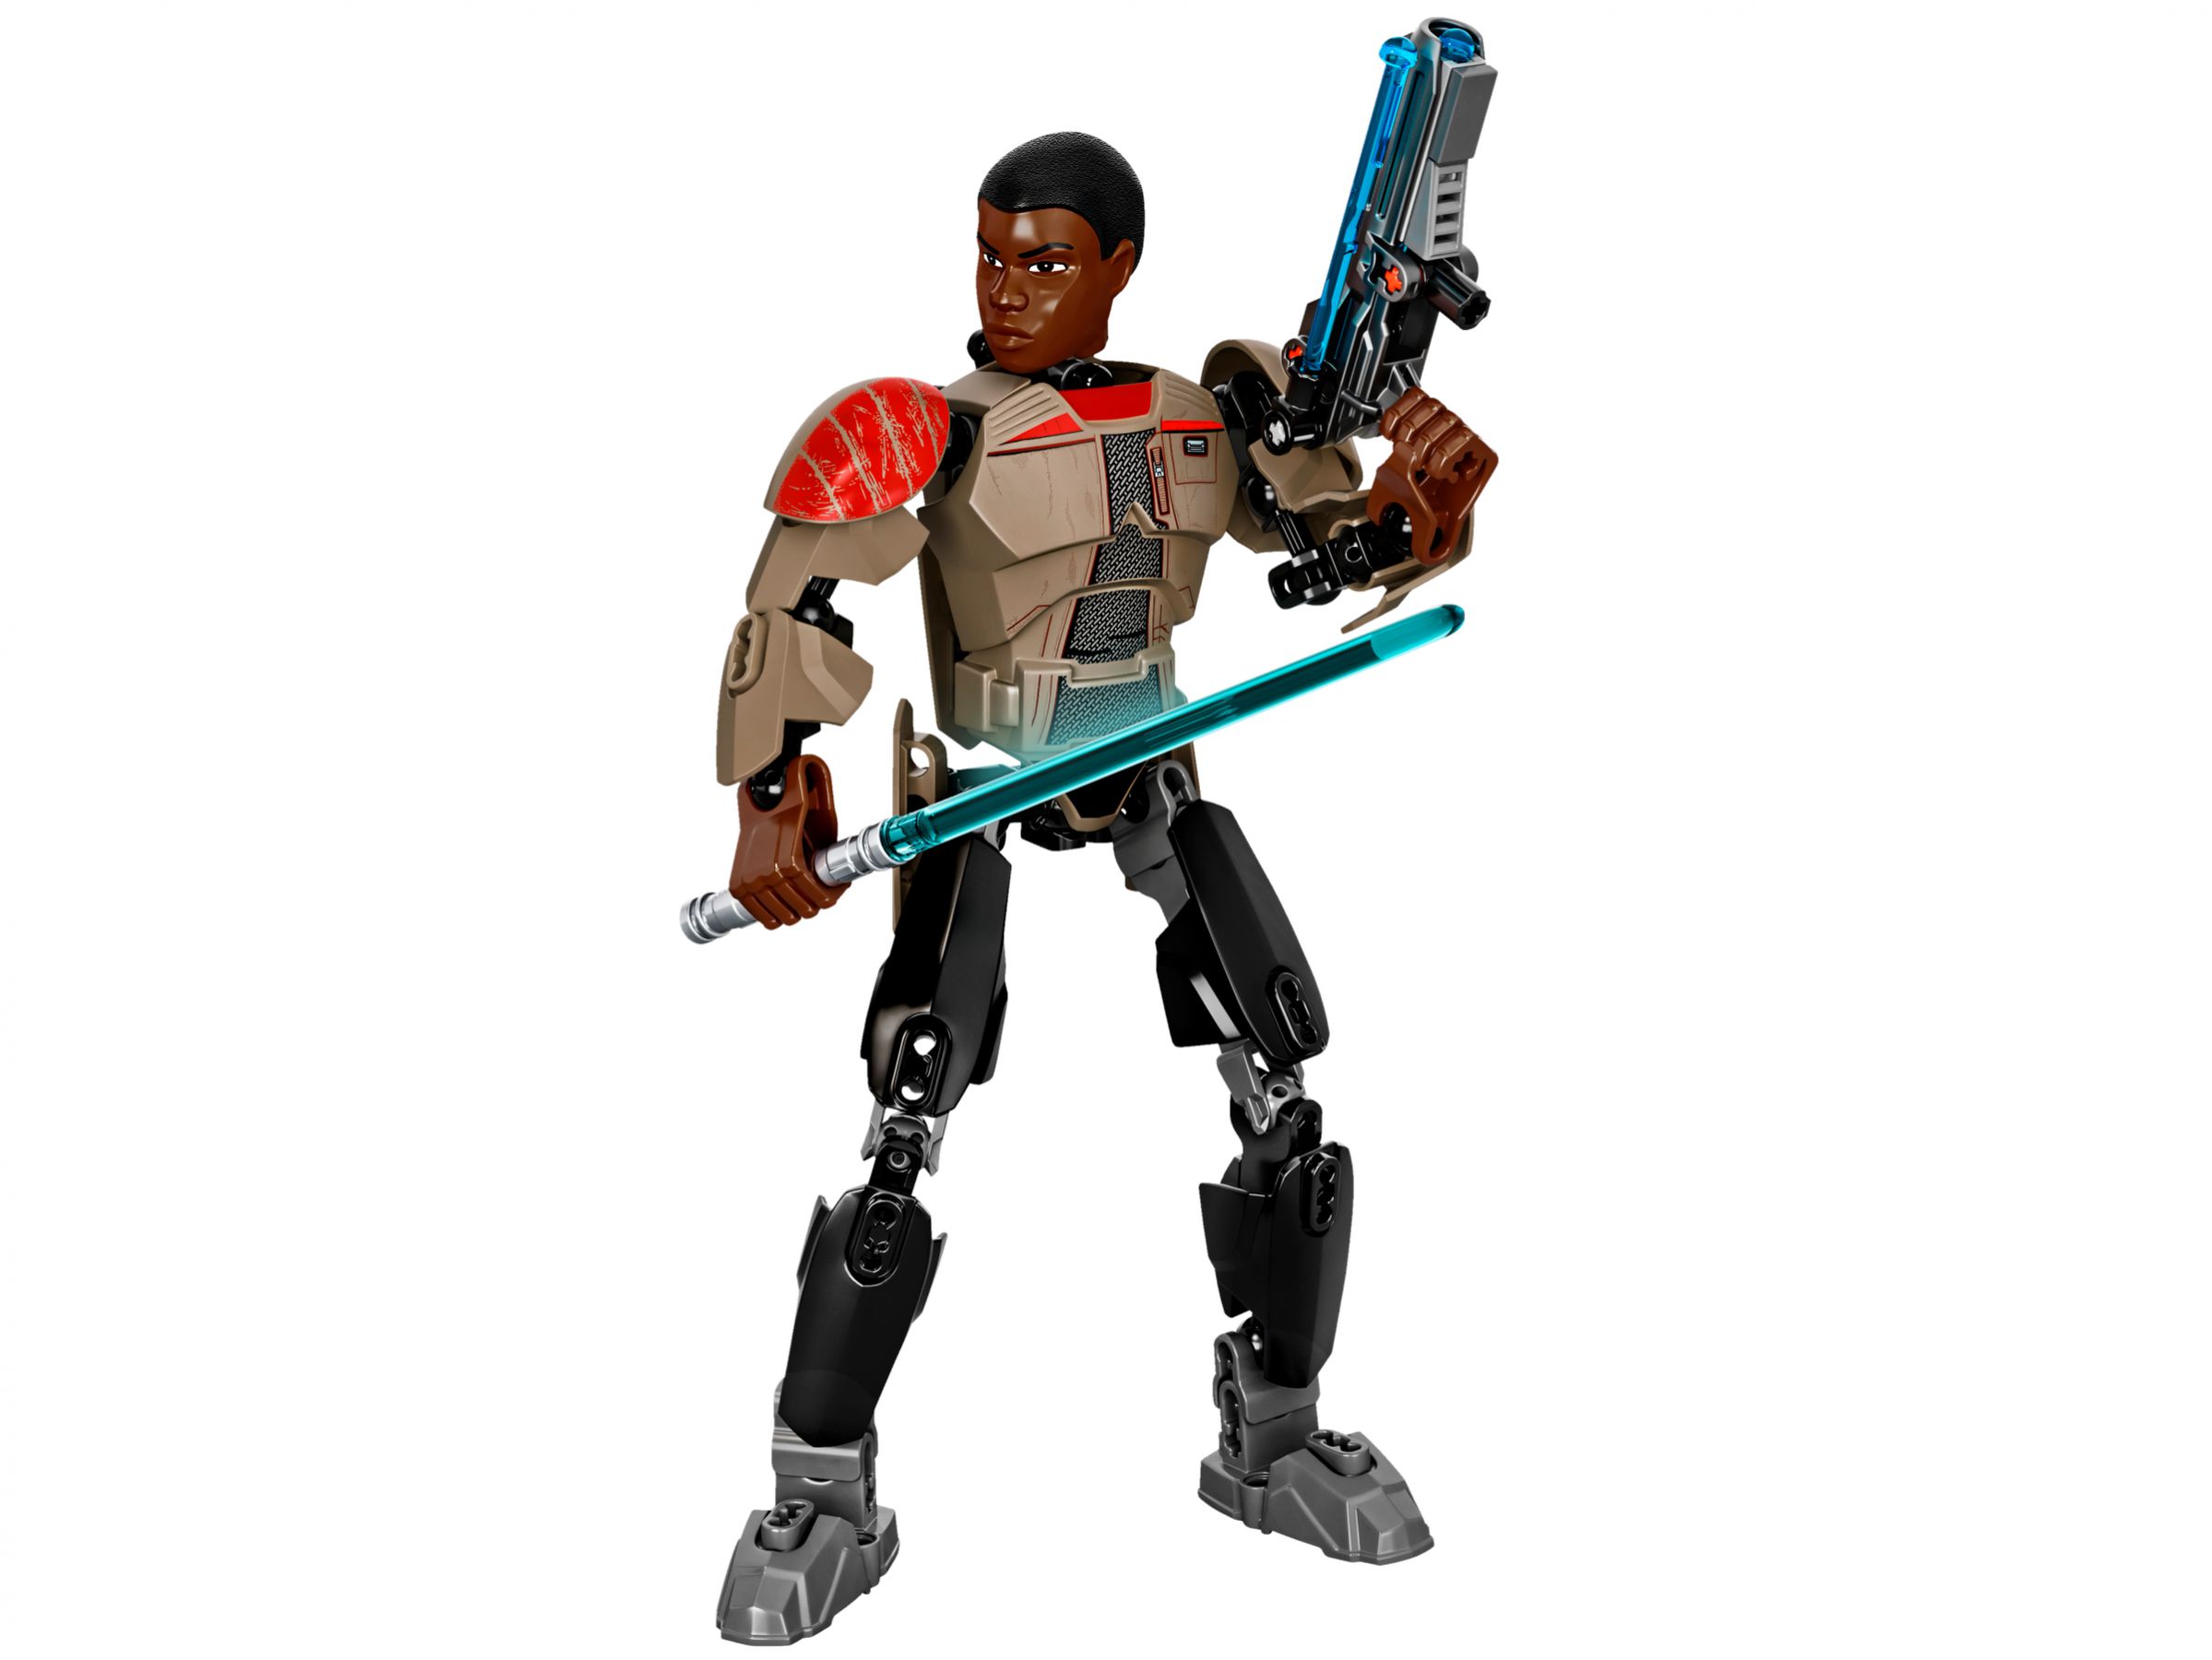 LEGO Star Wars Buildable Figures 75116 Finn